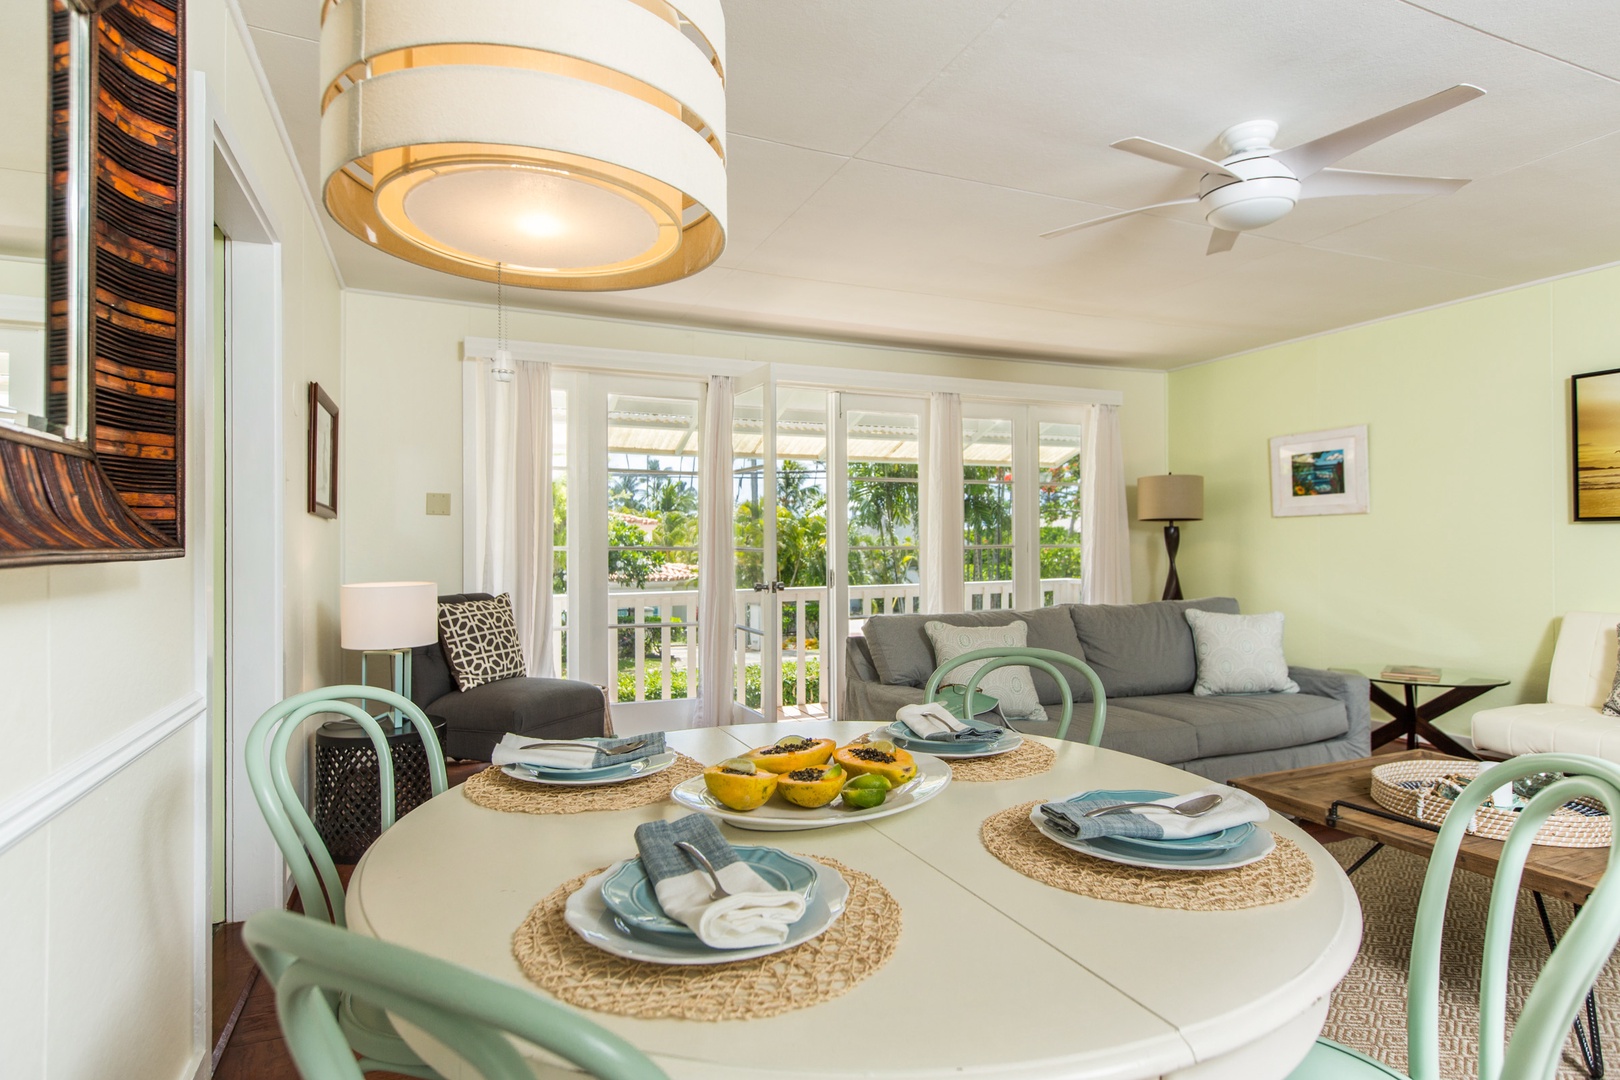 Kailua Vacation Rentals, Lanikai Cottage - Main house dining area.